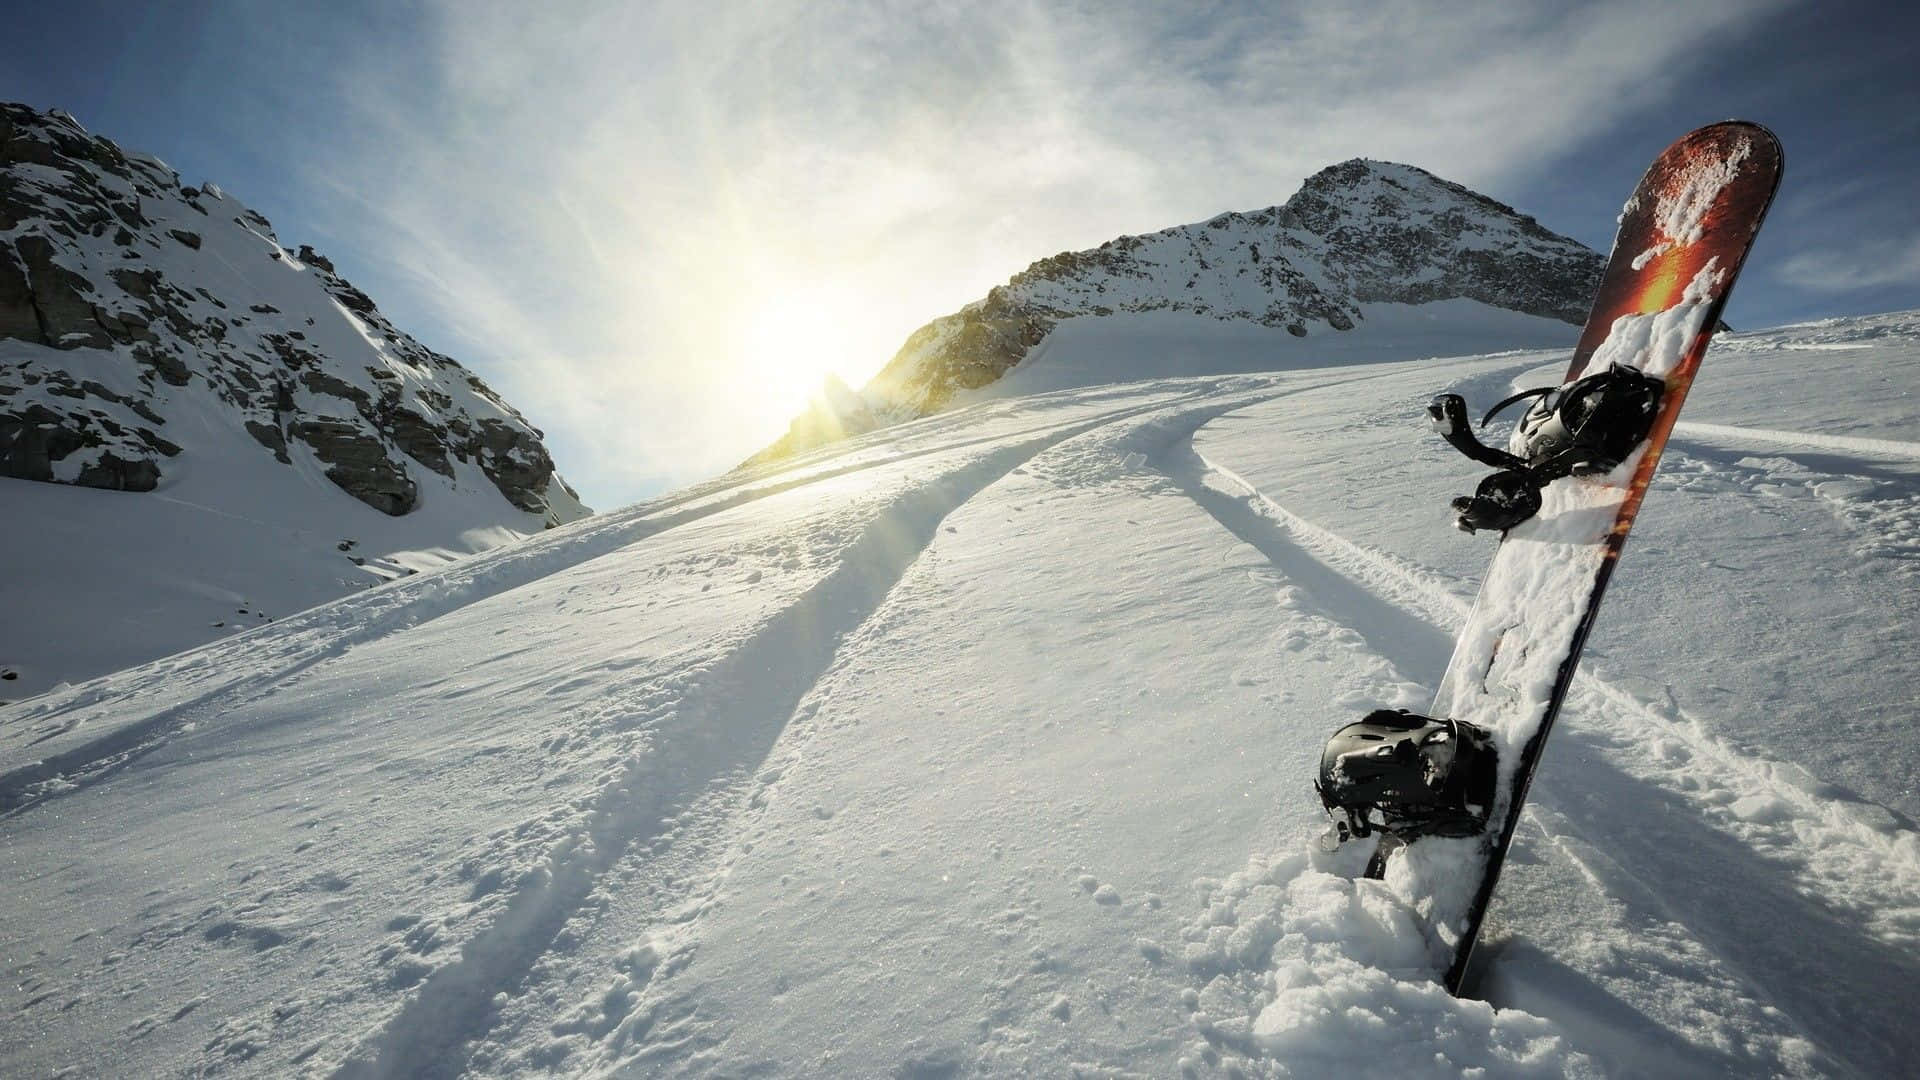 Thrilling Ski Adventure on Snowy Mountain Slope Wallpaper